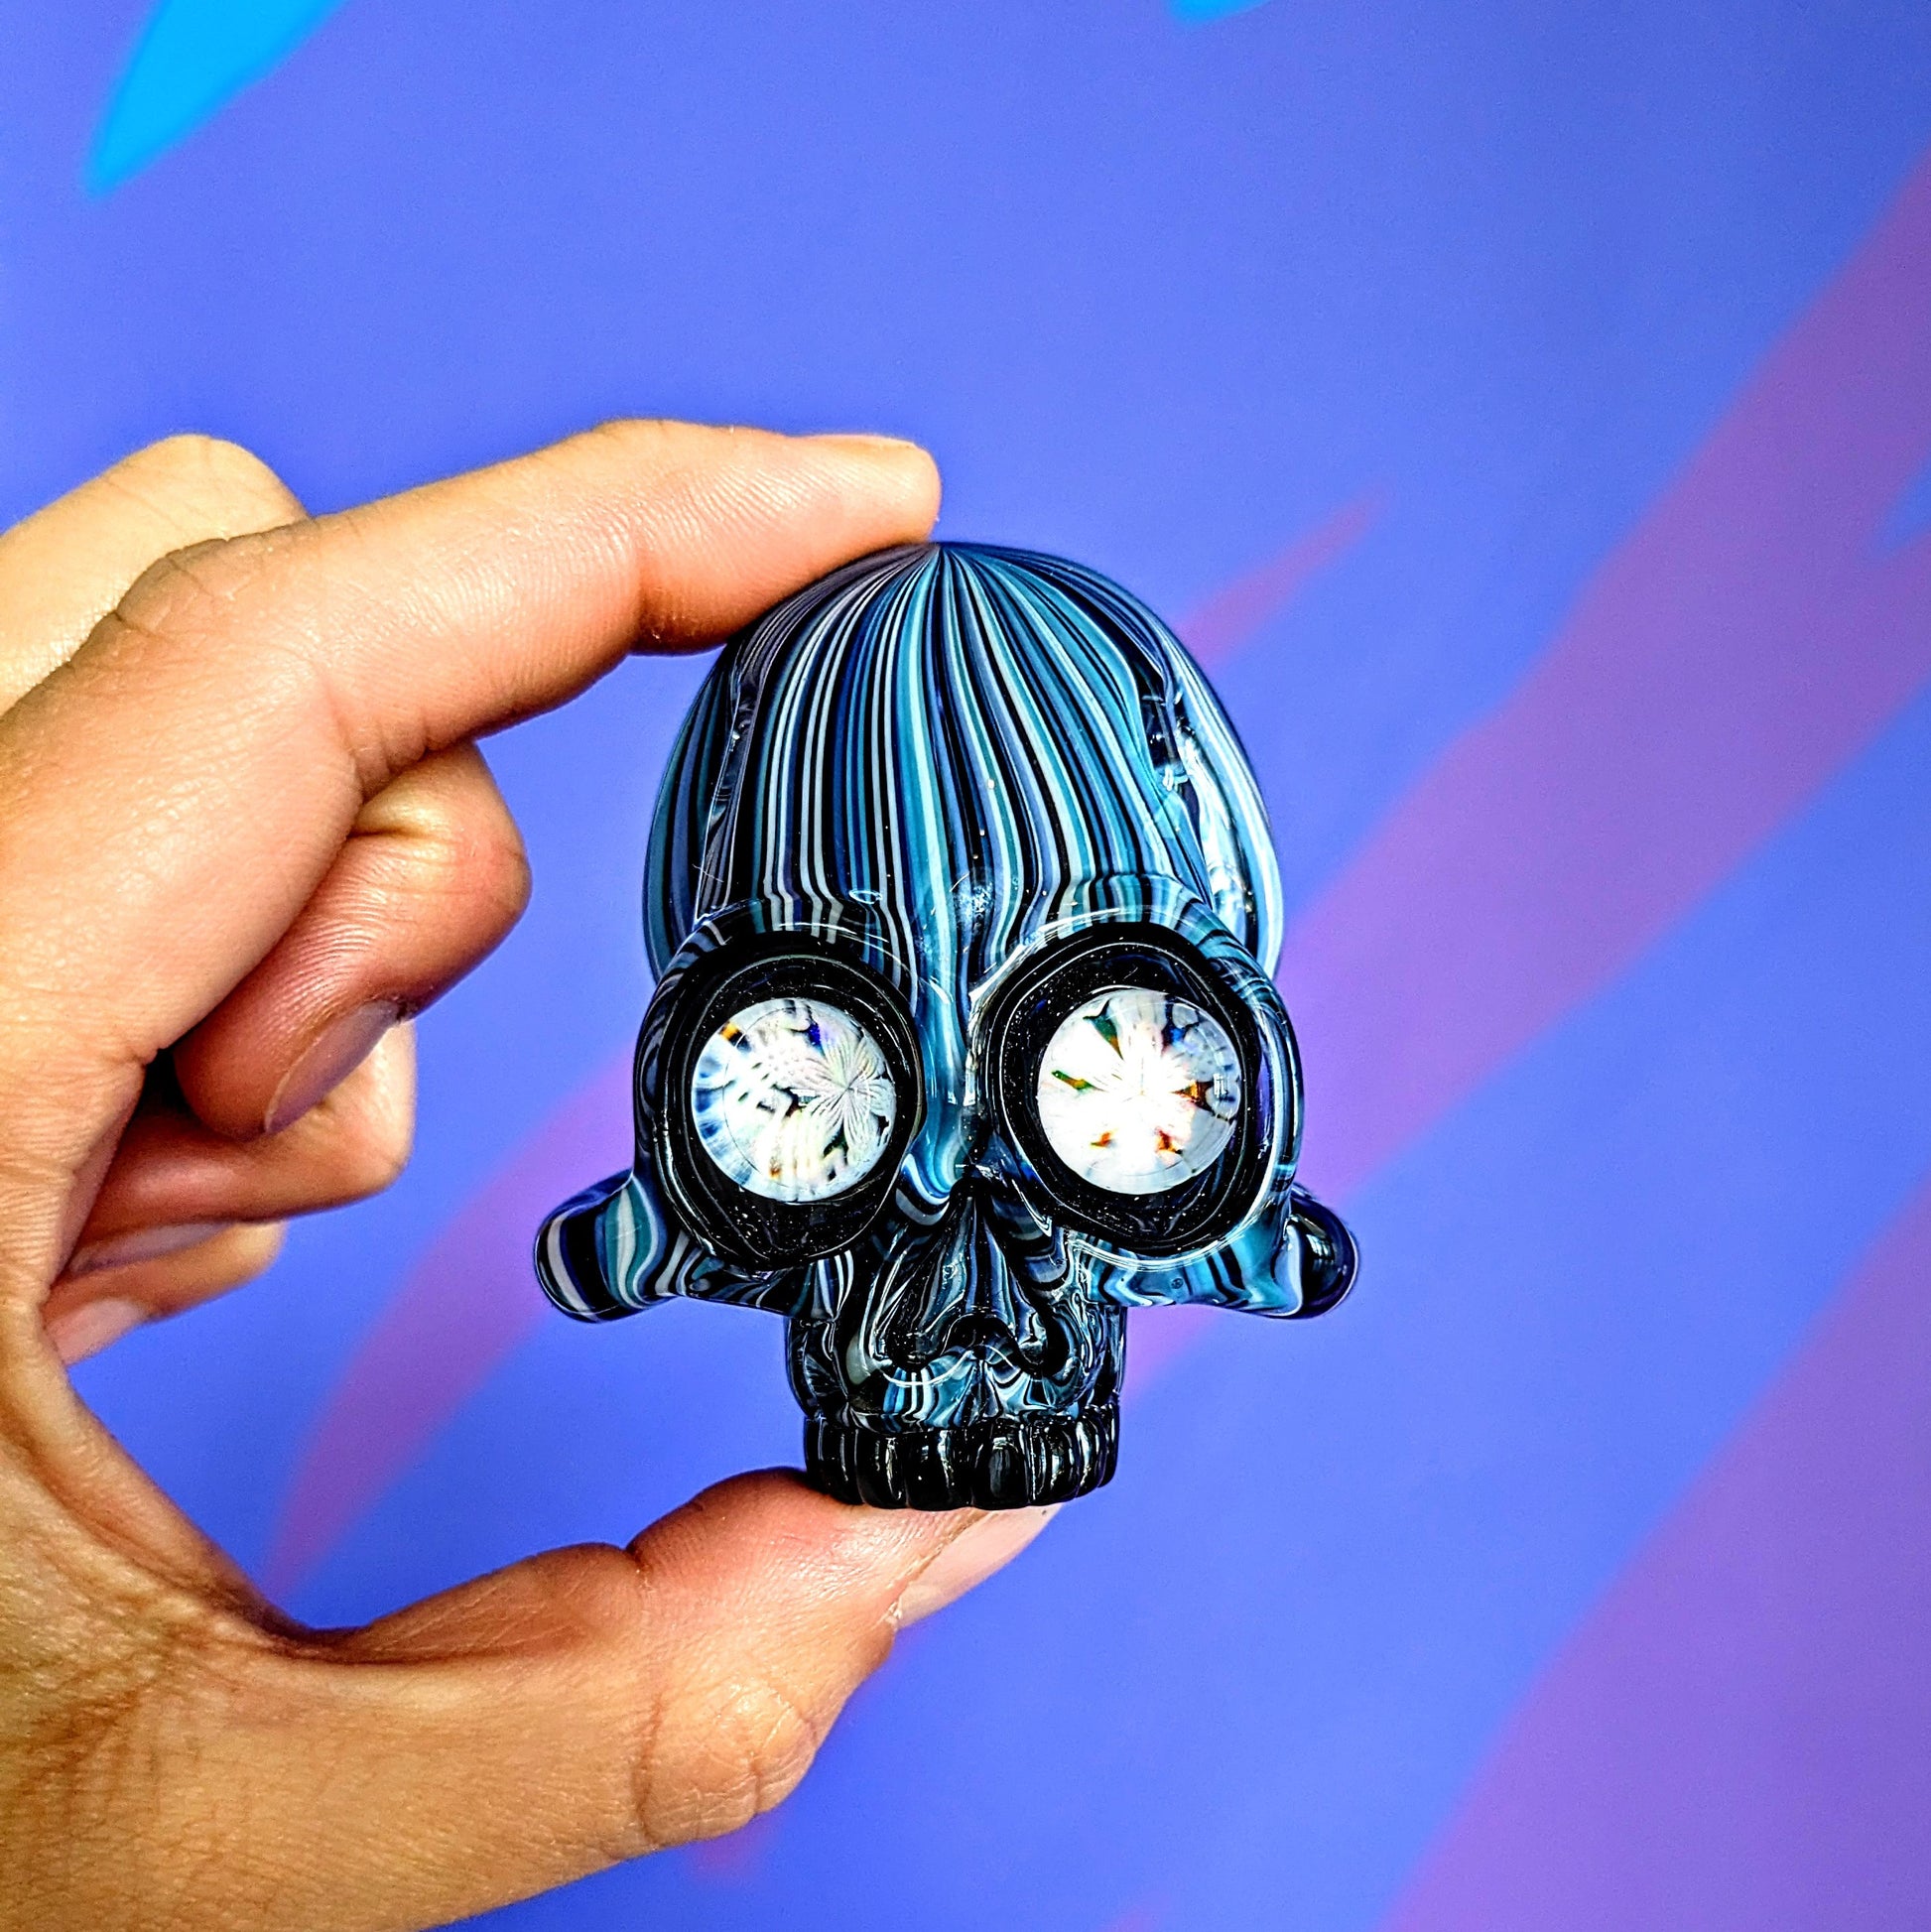 AKM  Skull, 2018 Illuminati Sleeved Borosilicate Glass Skull Pendant with Opal Eyes Approx. 2.4 x 2.4 in Hand blown glass made by AKM. Signed "AKM" + Dated "2018"